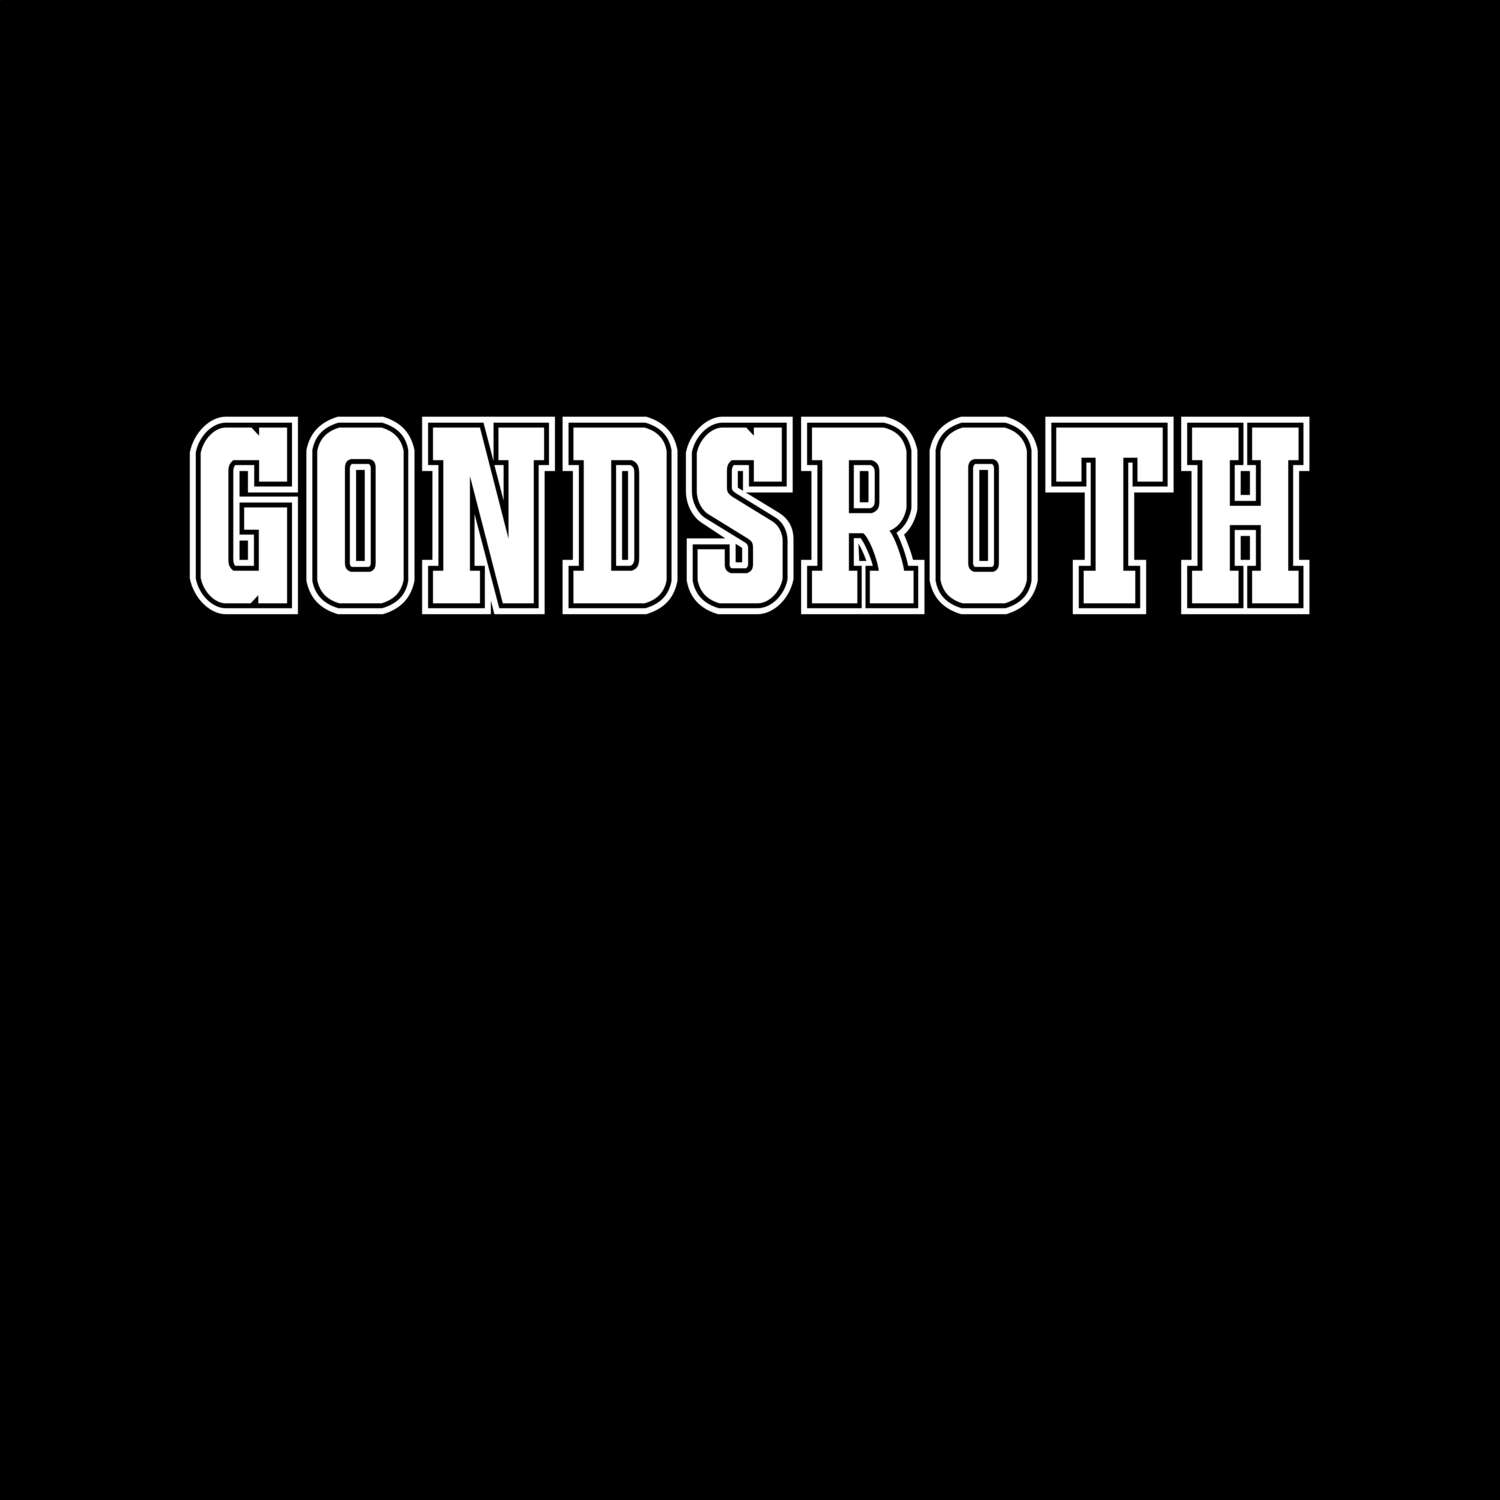 Gondsroth T-Shirt »Classic«